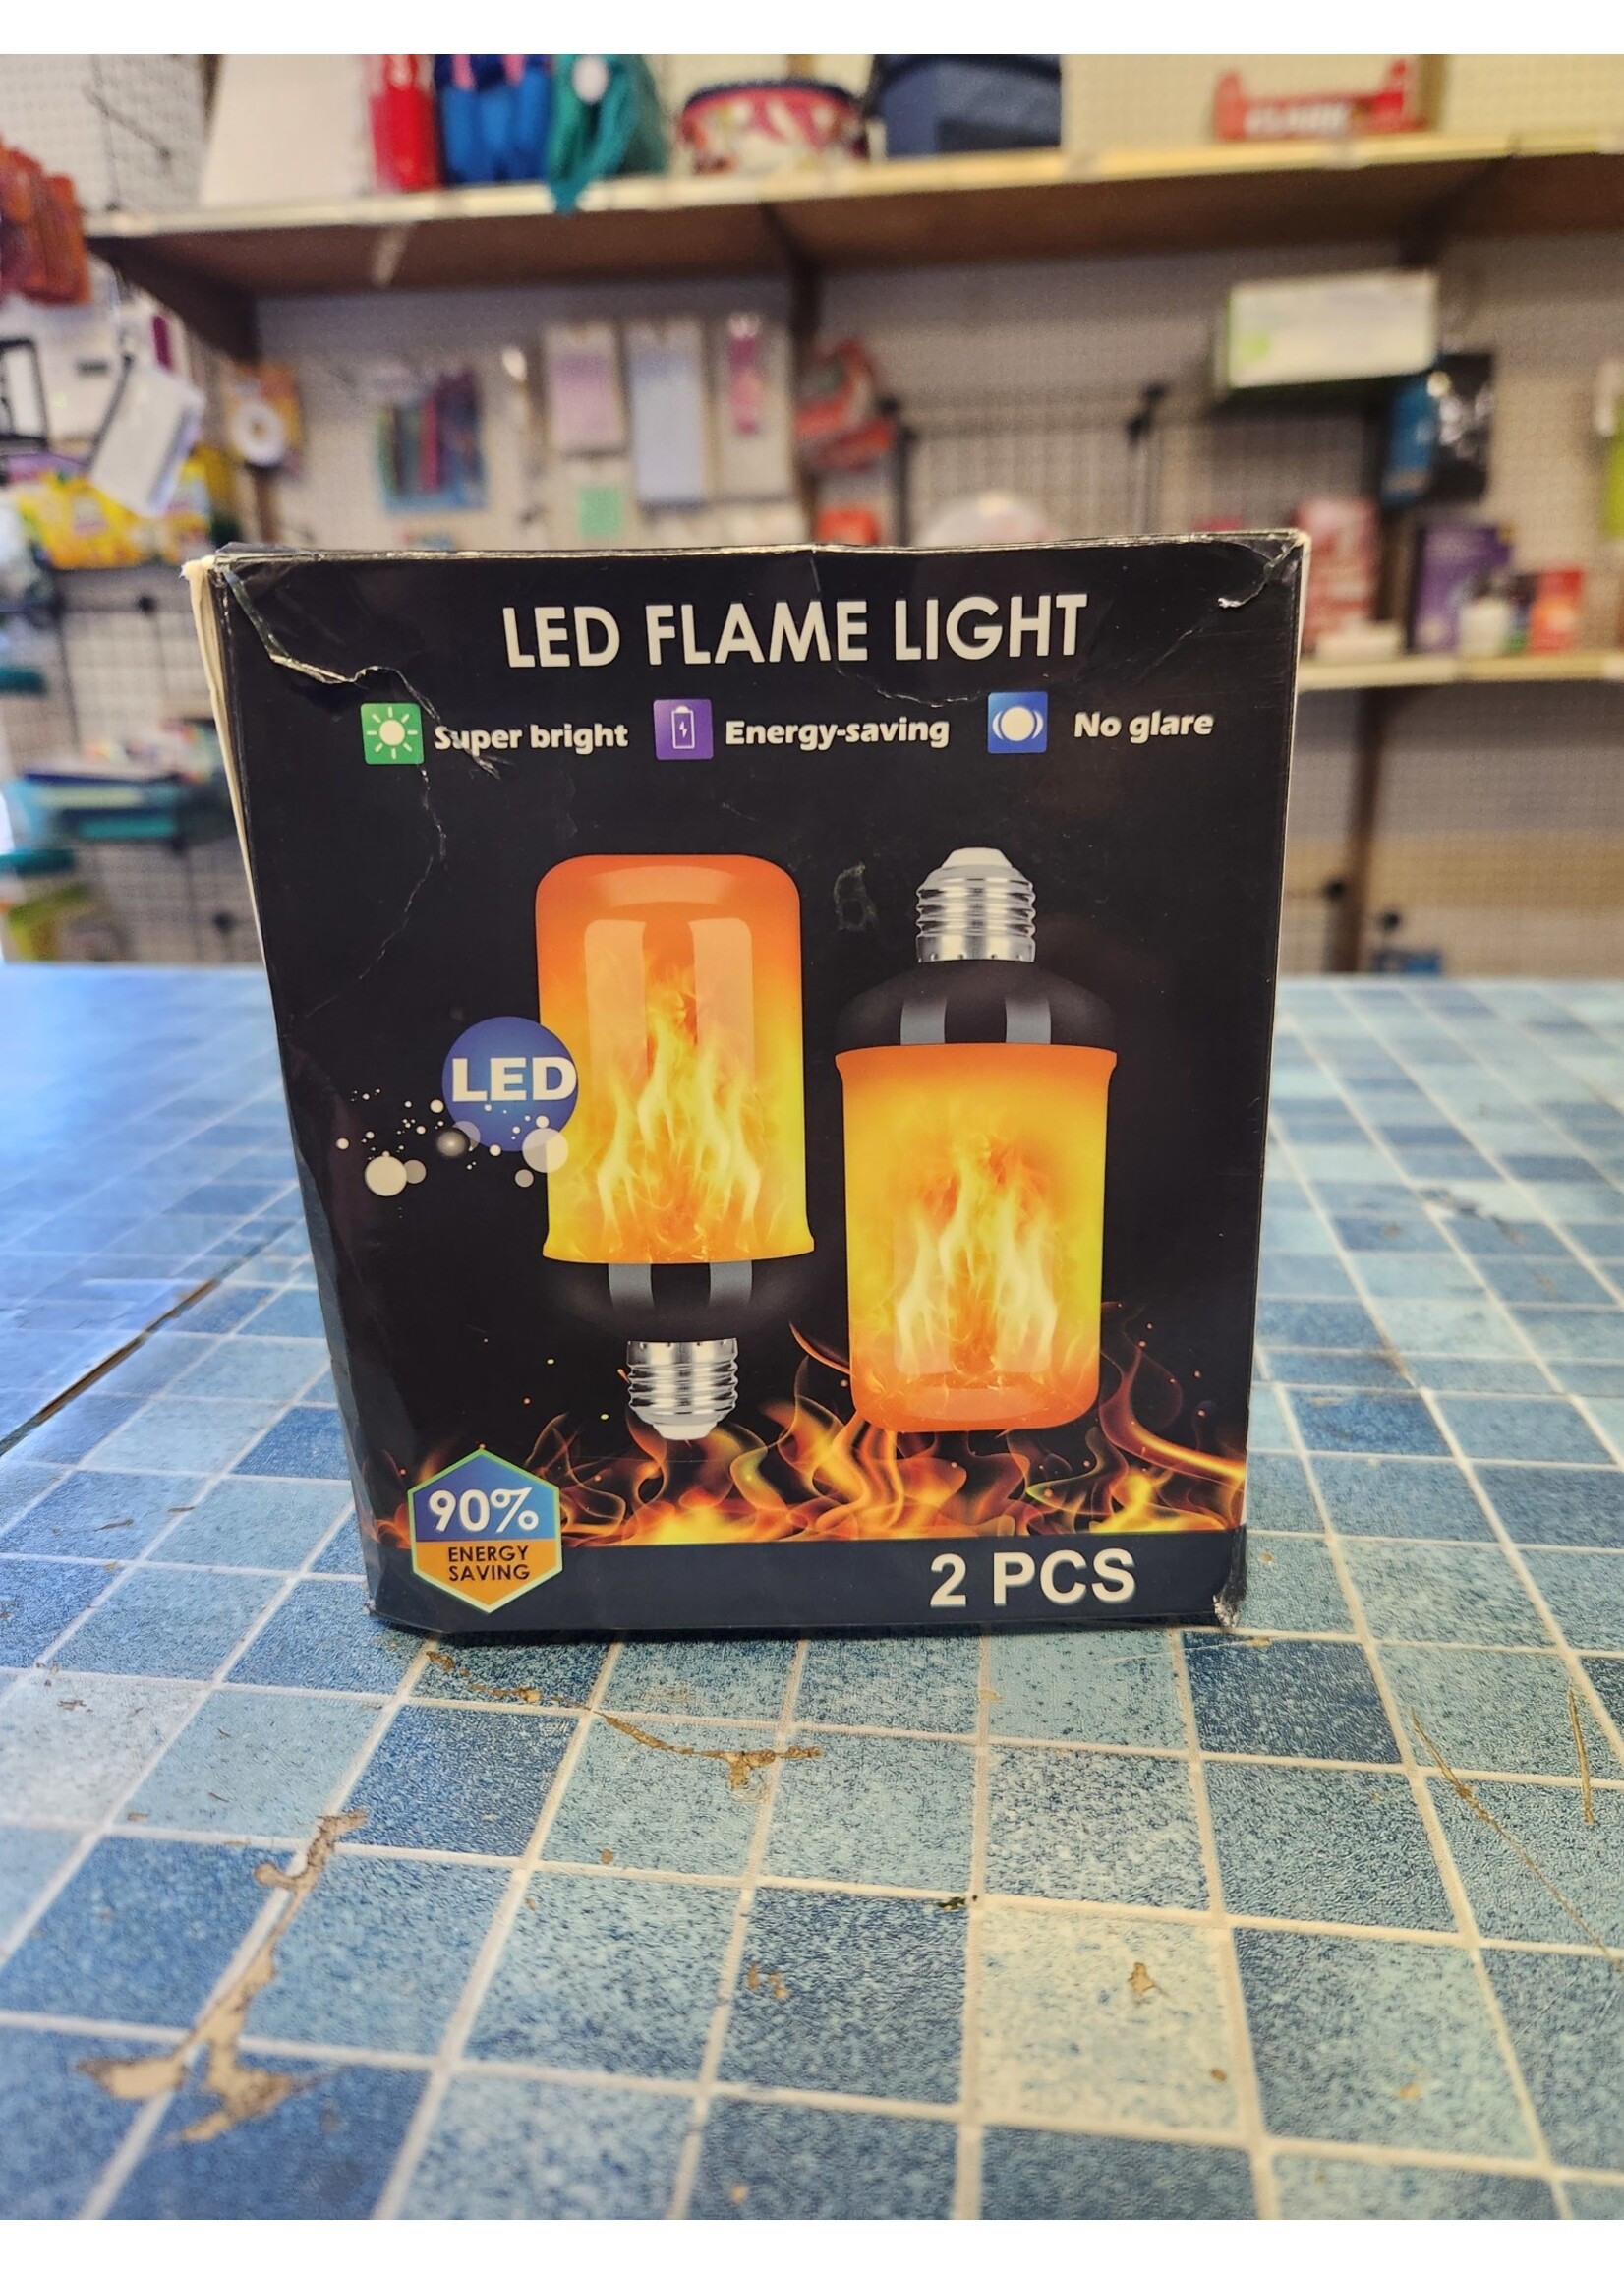 ldf3w933 - Lampe LED 3W - E14 Flamme Dépolie - 250 Lm NITYAM